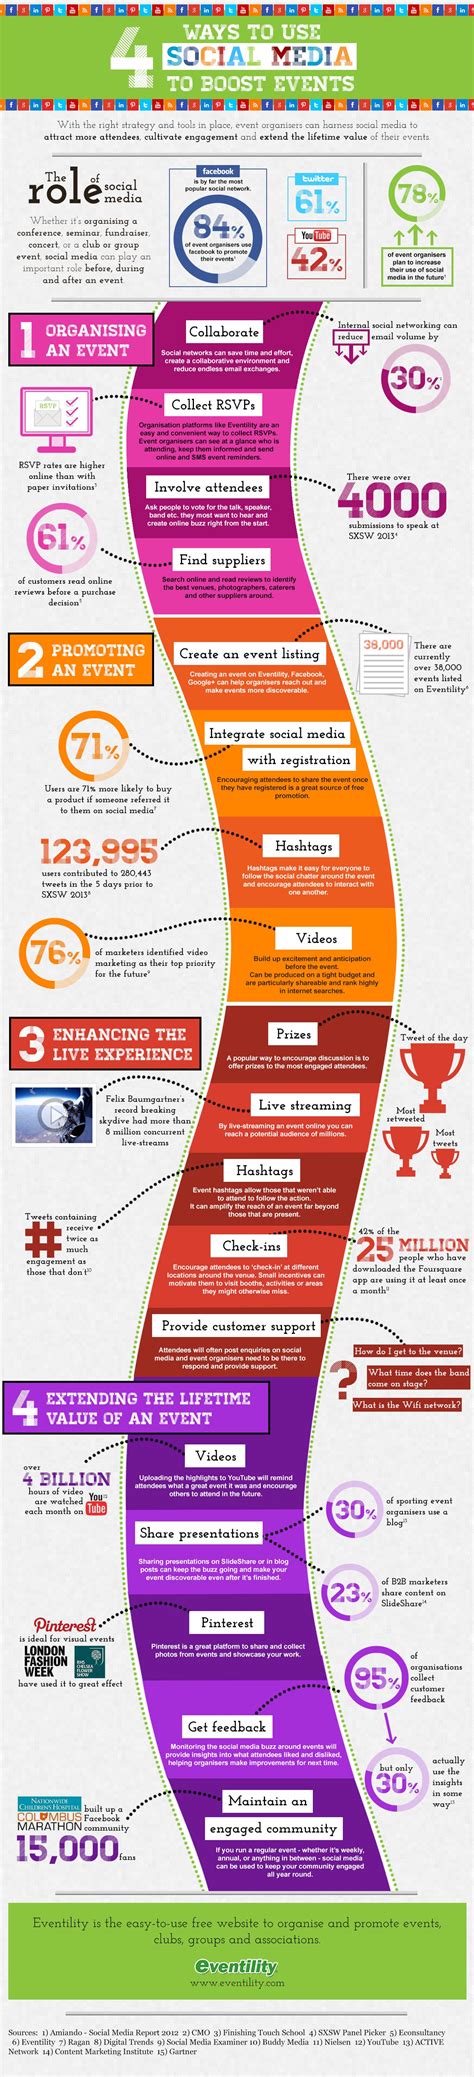 Integrating Social Media Into Event Marketing [infographic] Smart